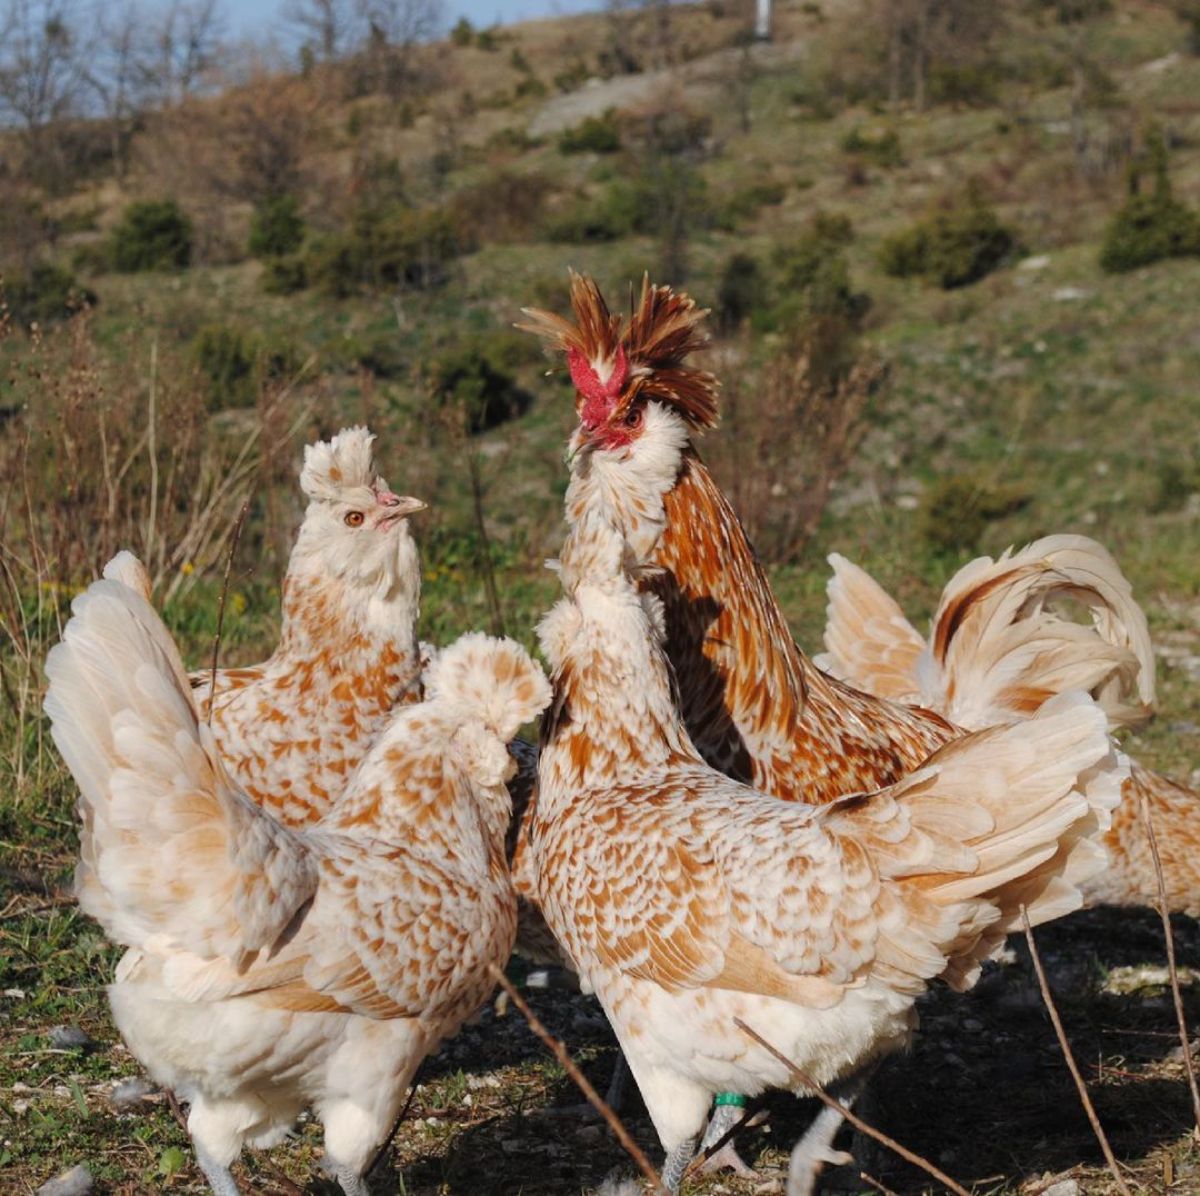 An adorable Brabanter chicken flock on a pasture.